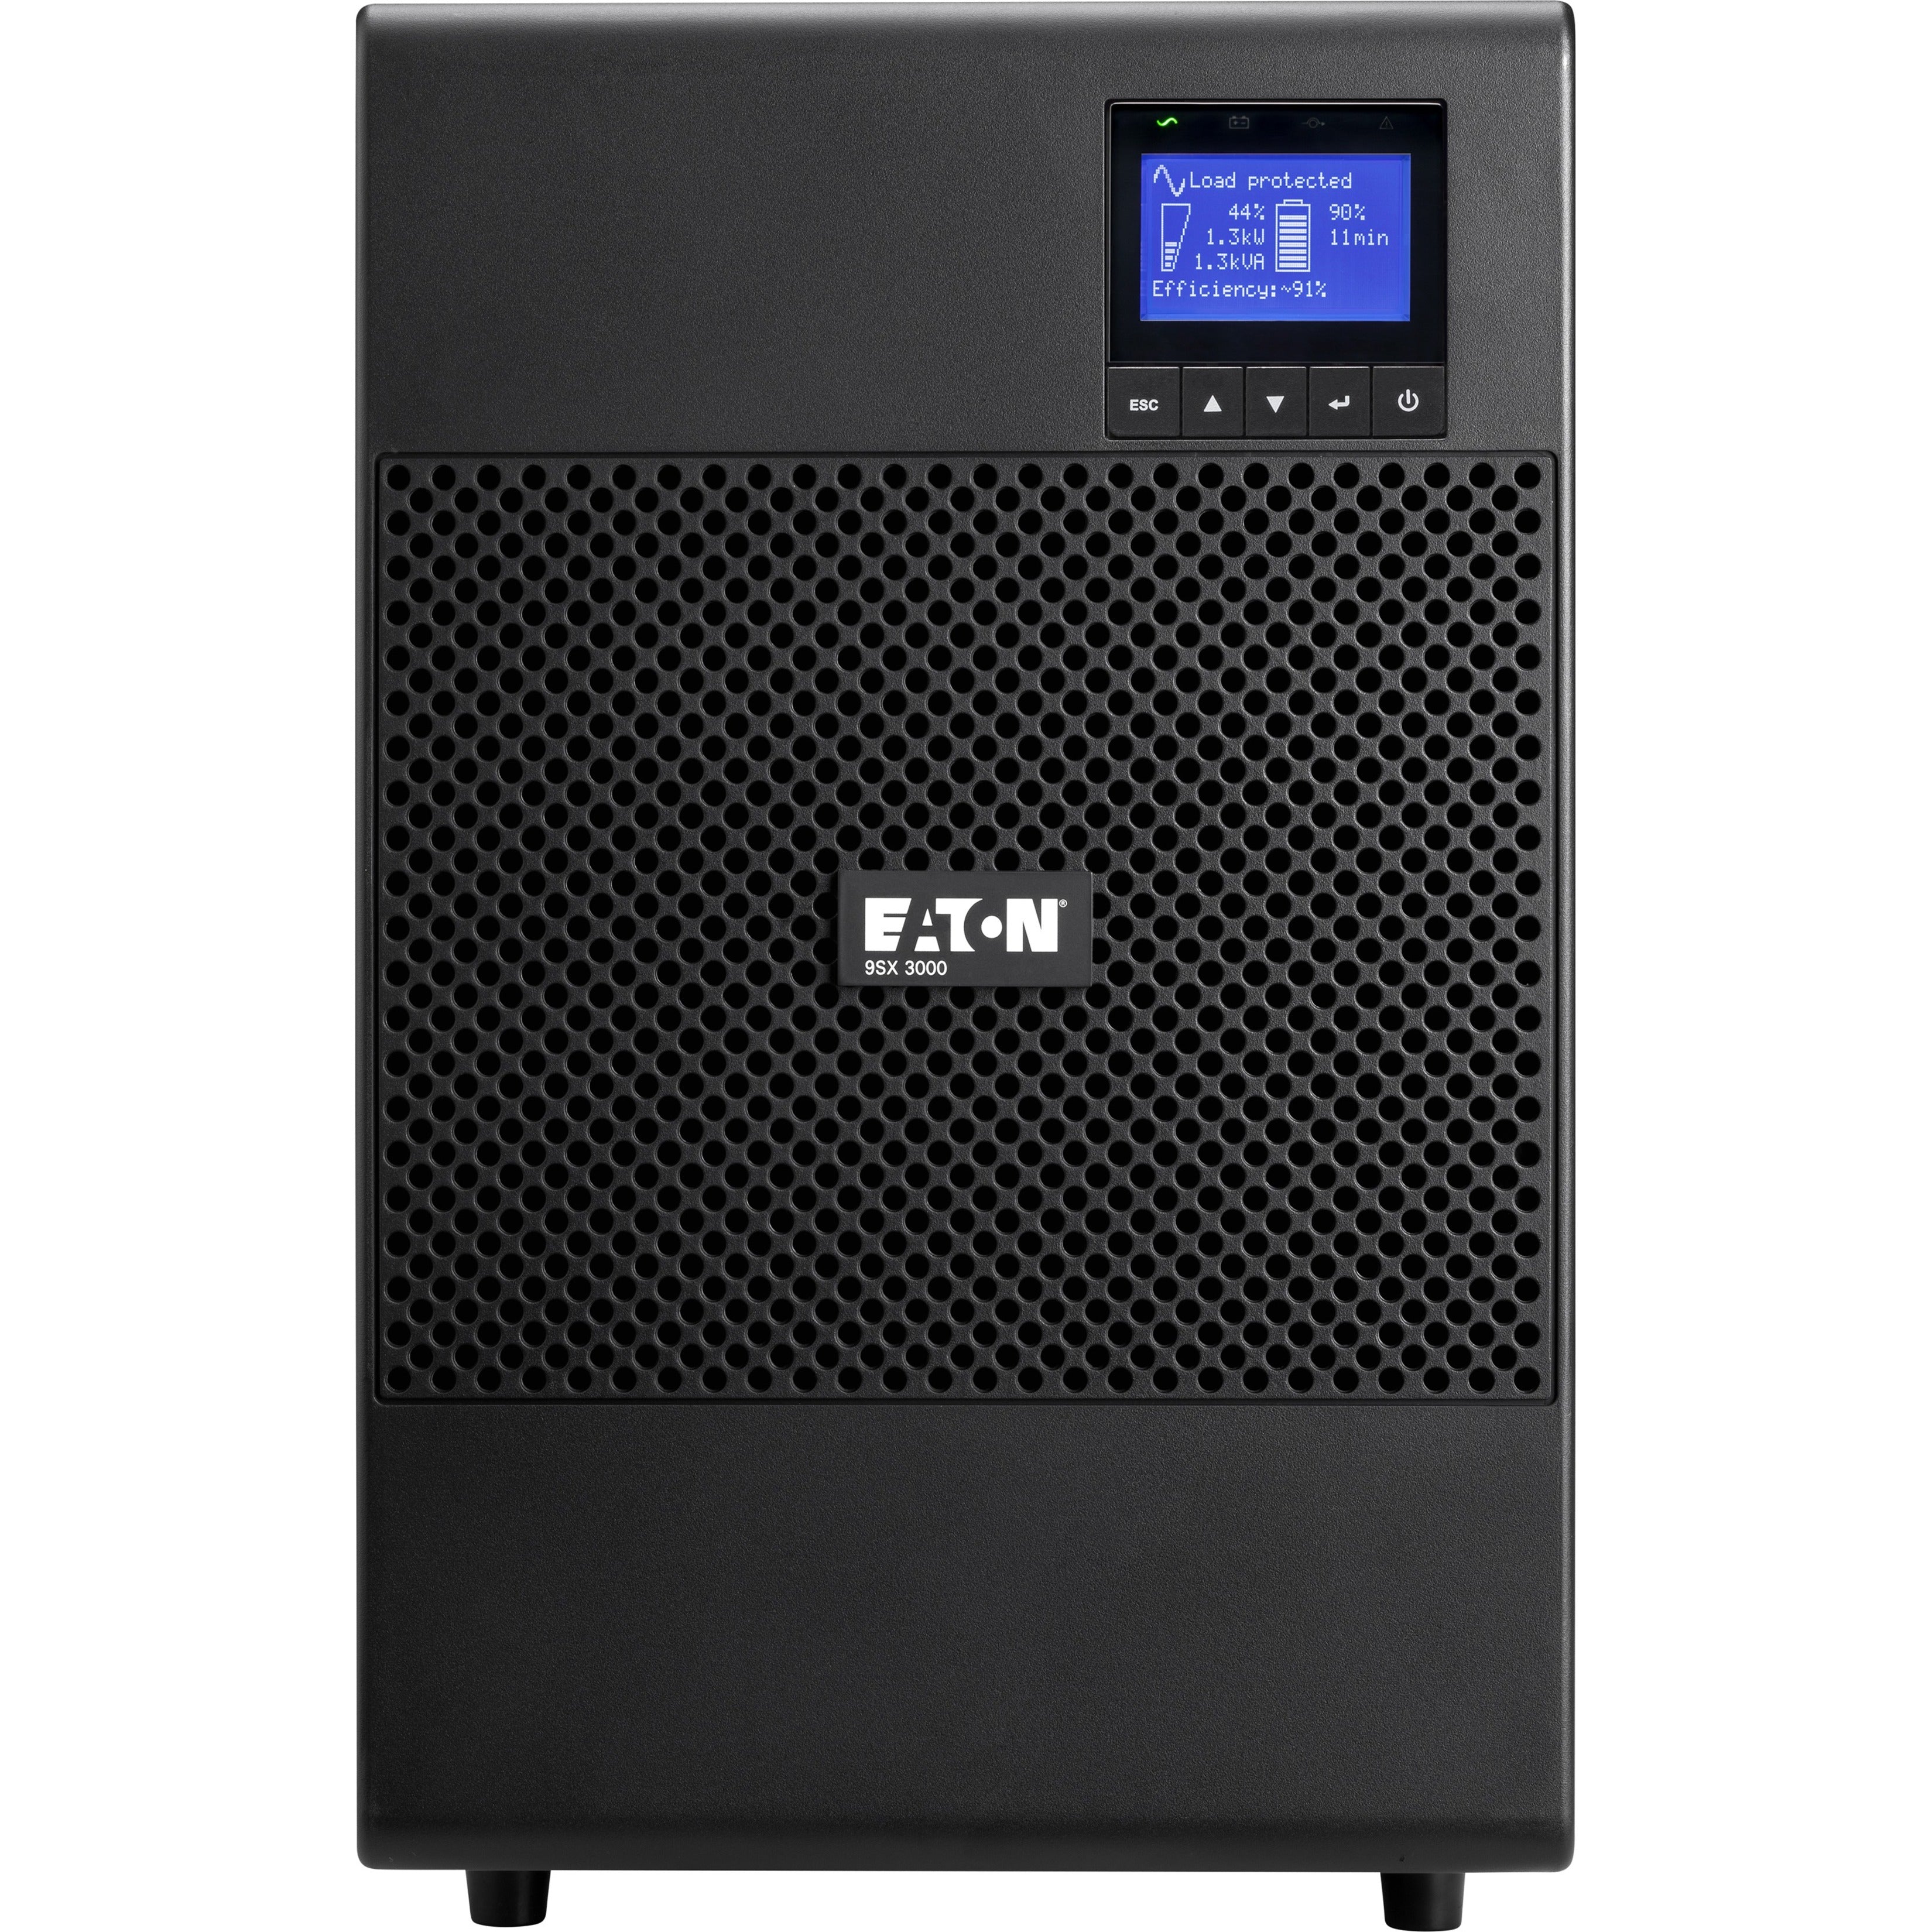 Eaton 9SX3000G 1000VA Tower UPS, 3KVA 208/208, 5.80 Minute Backup, Sine Wave